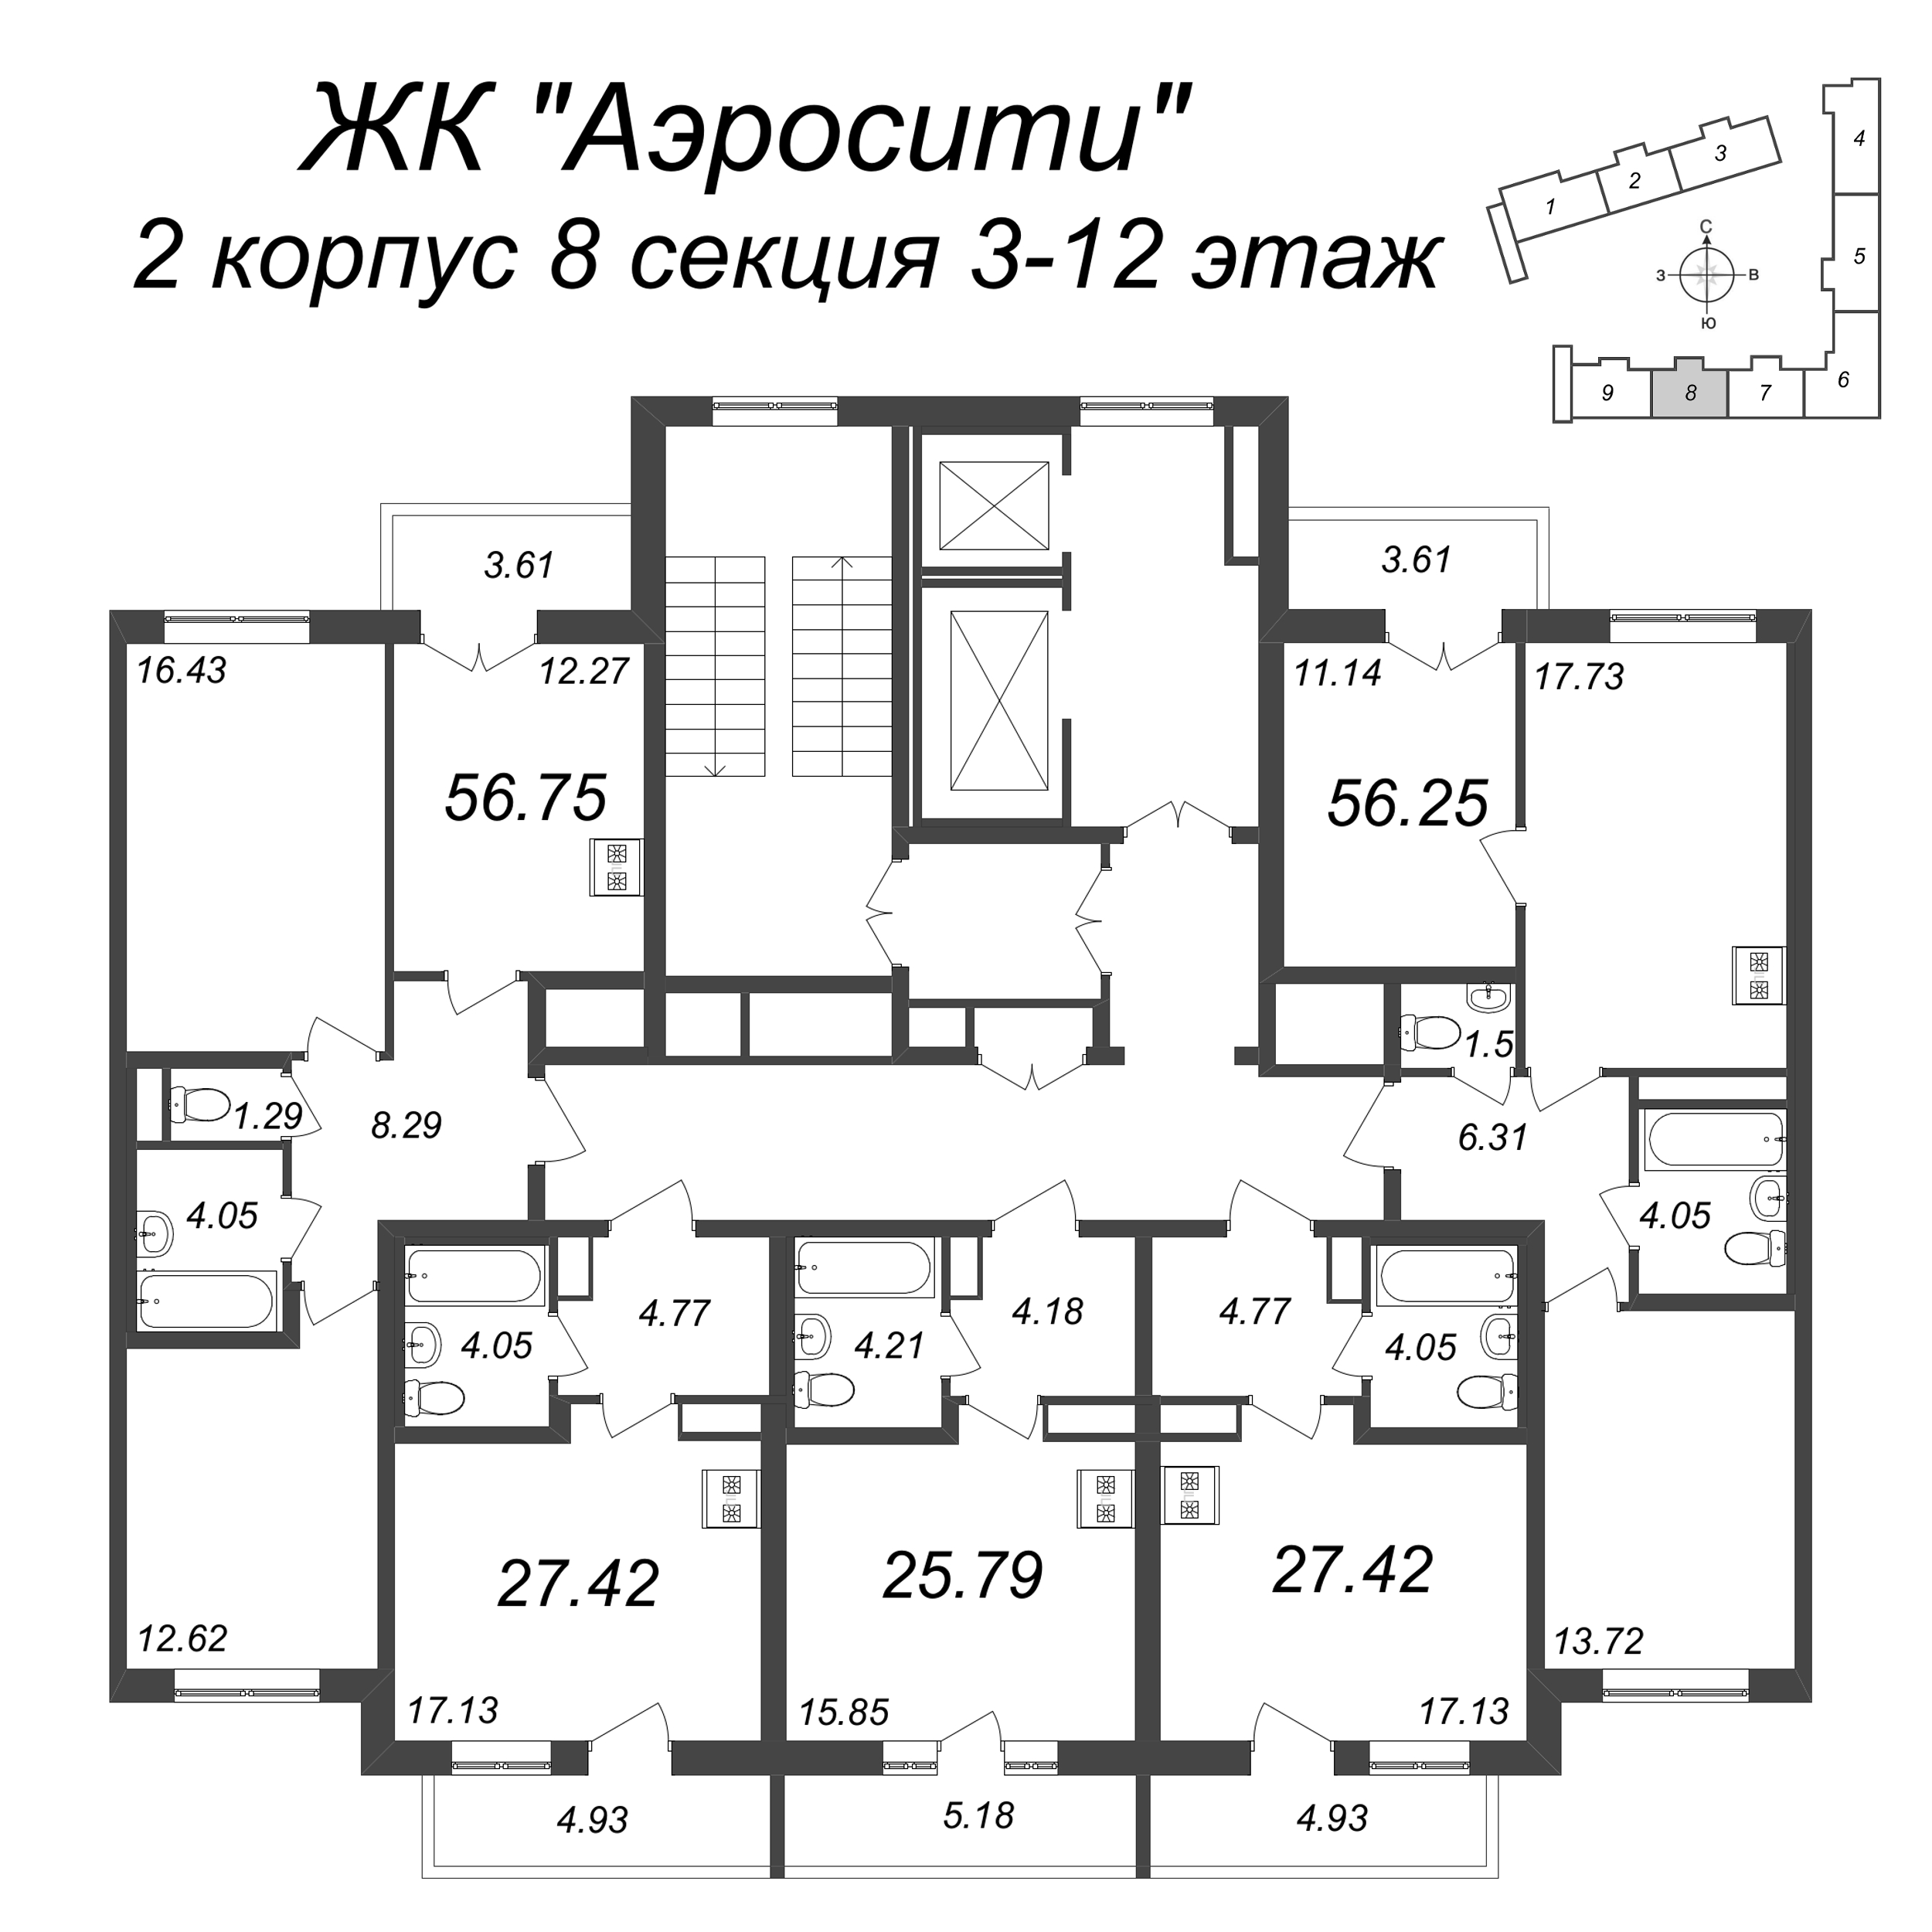 3-комнатная (Евро) квартира, 56.25 м² - планировка этажа